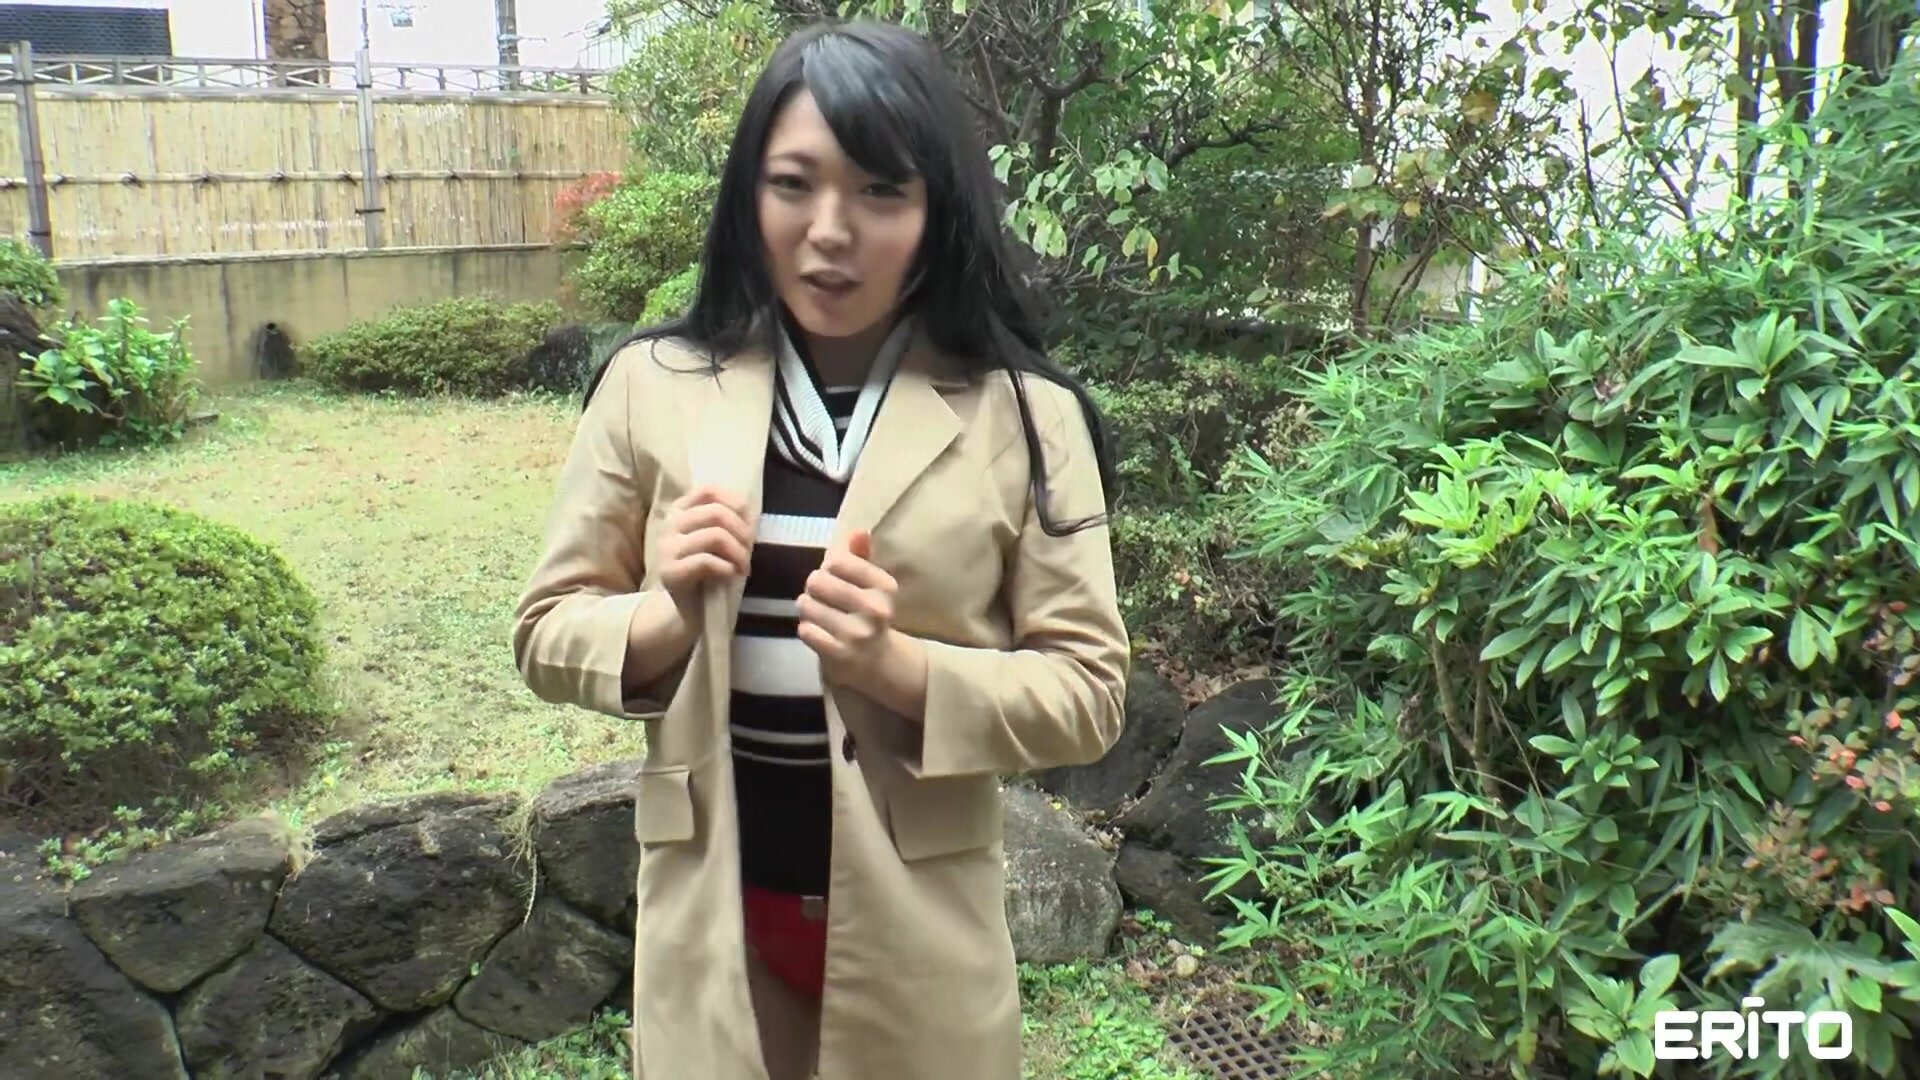 Erito - Outdoor Flashing Makes Yui Horny JAPANESE